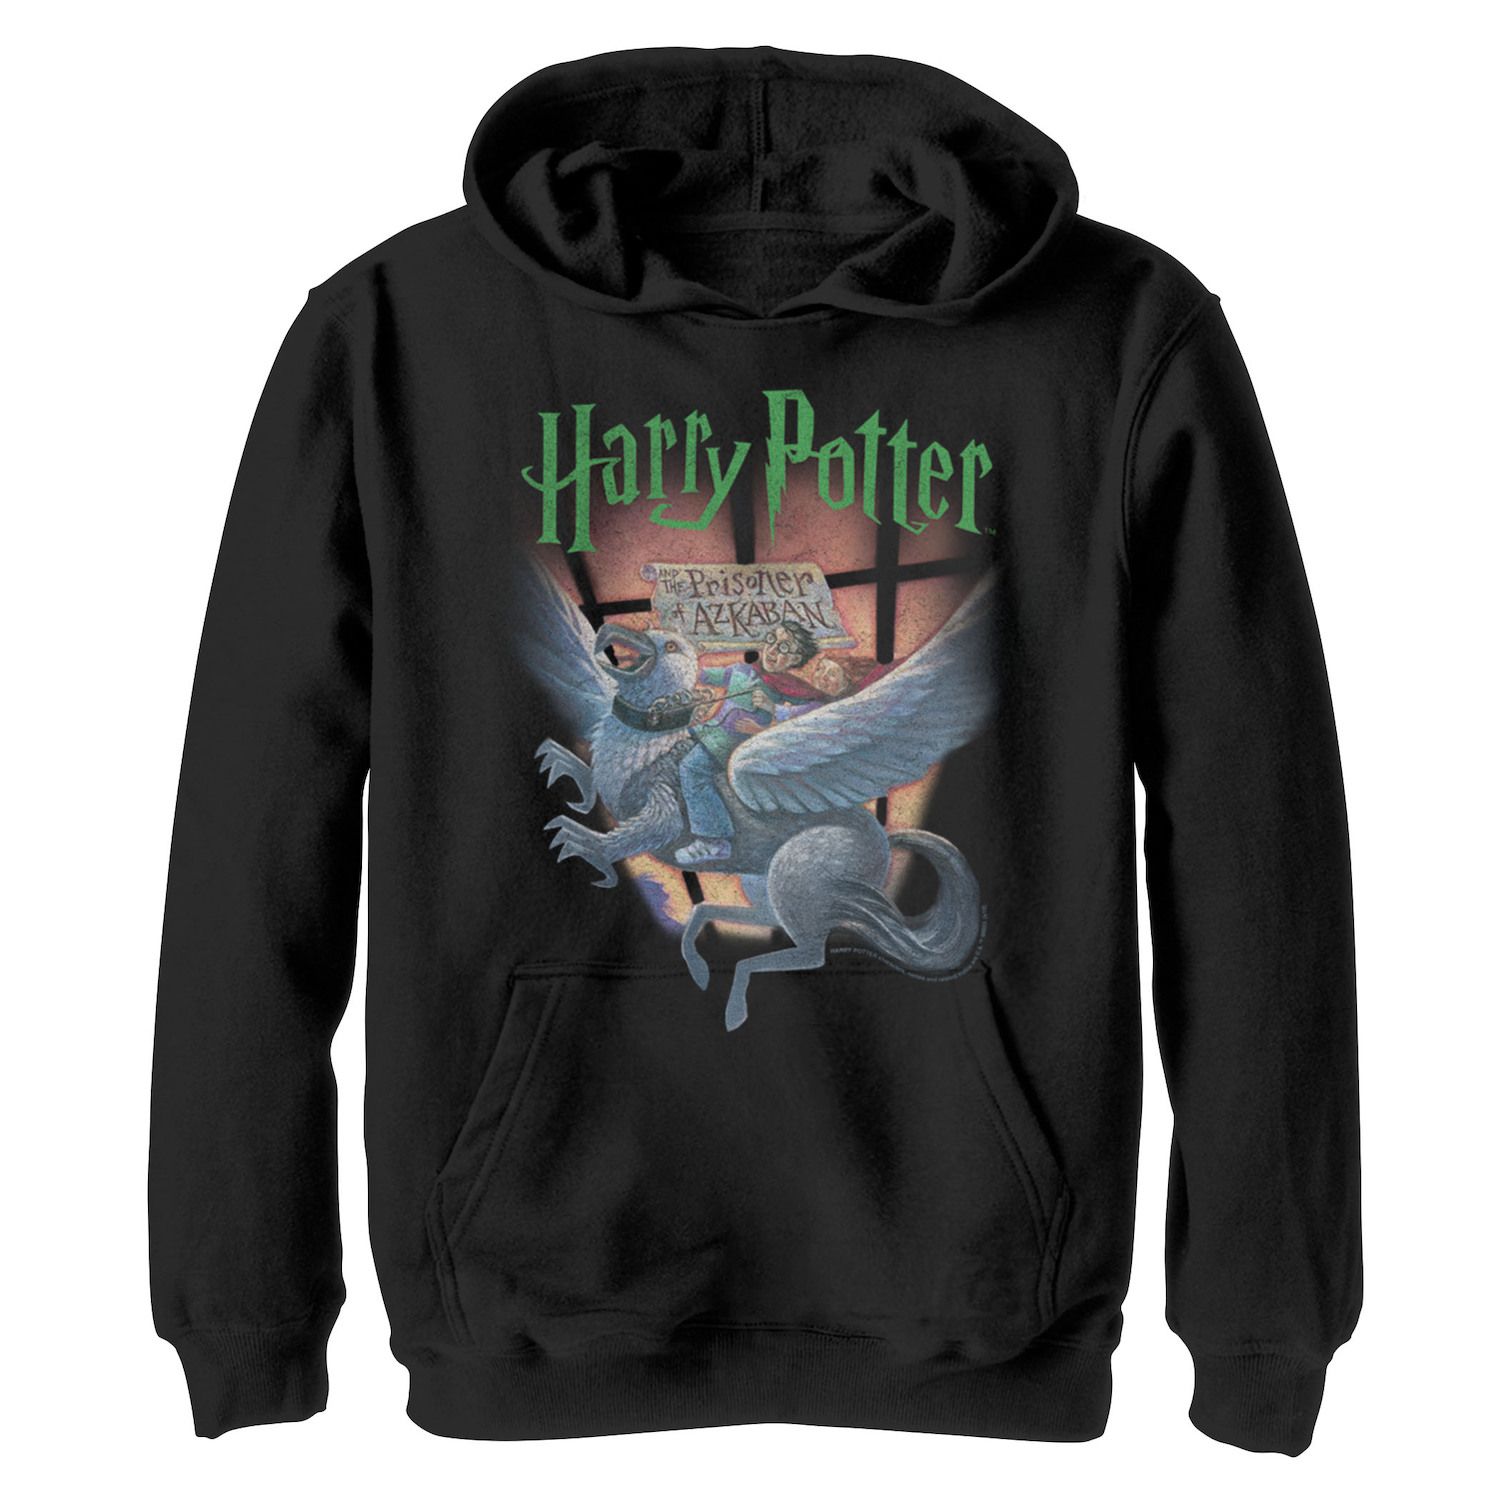 Harry Potter Toddler Boy Colorblock Pullover Sweatshirt